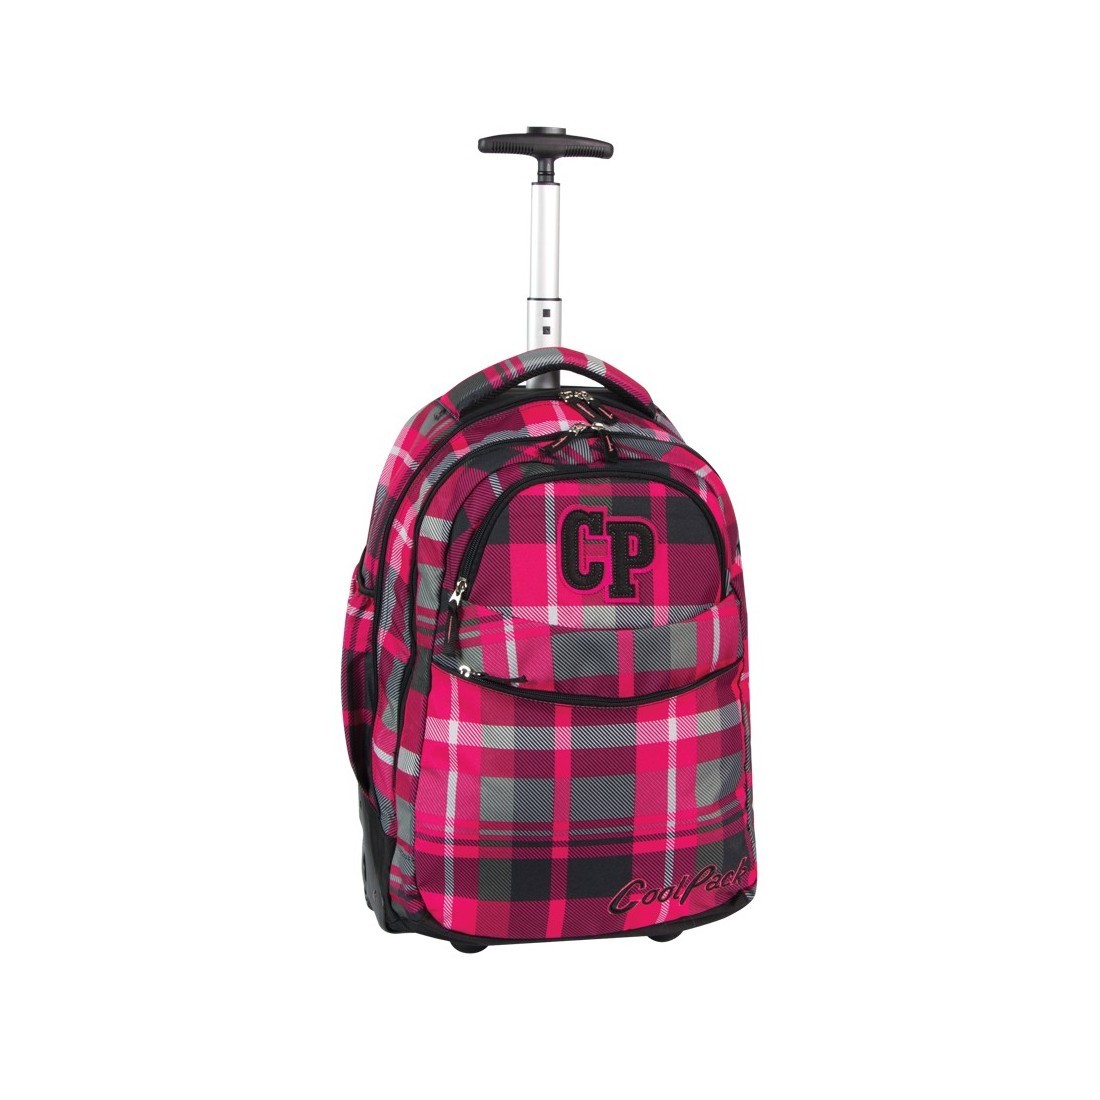 Plecak CoolPack na kółkach dla dziewczynki w kratę - RAPID RUBIN CP 103 - plecak-tornister.pl